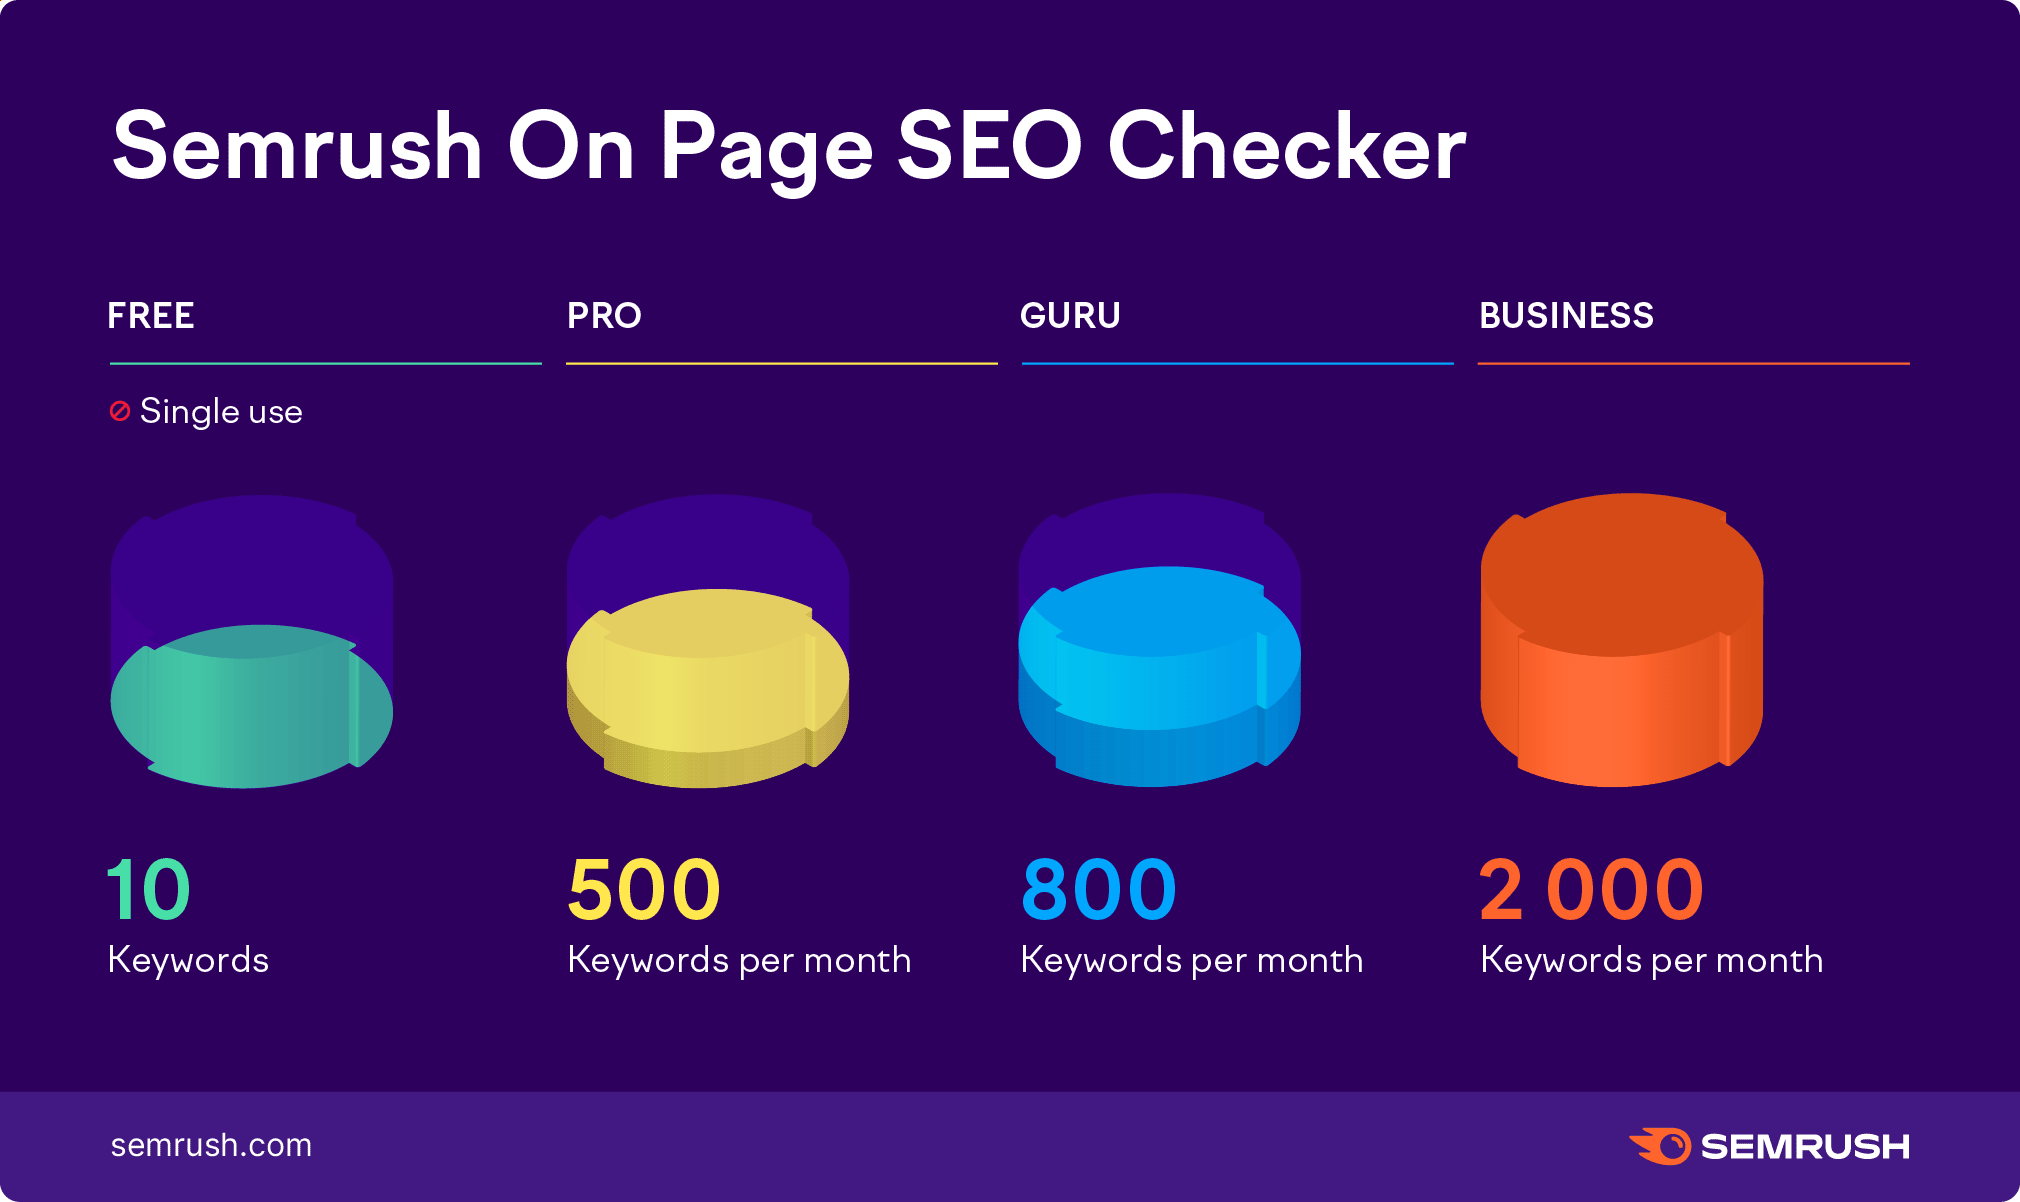 Semrush On Page SEO Checker. Free plan: single use, 10 keywords. Pro plan: 500 keywords per month. Guru: 800 keywords per month. Business plan: 2000 keywords per month. 